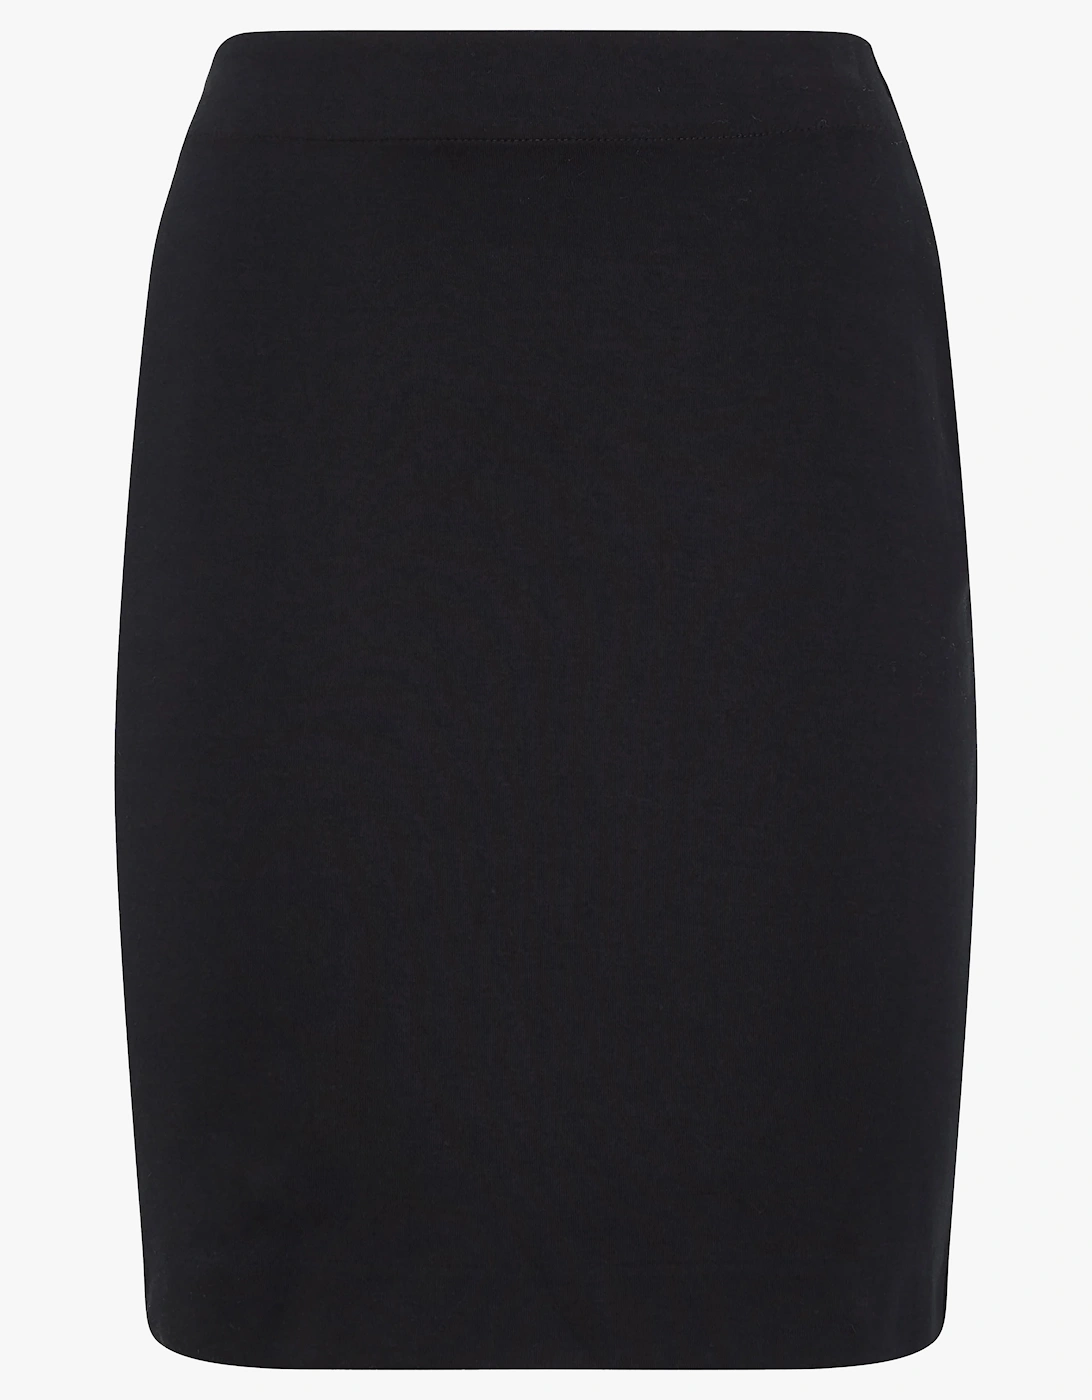 Rita Skirt in Black, 4 of 3